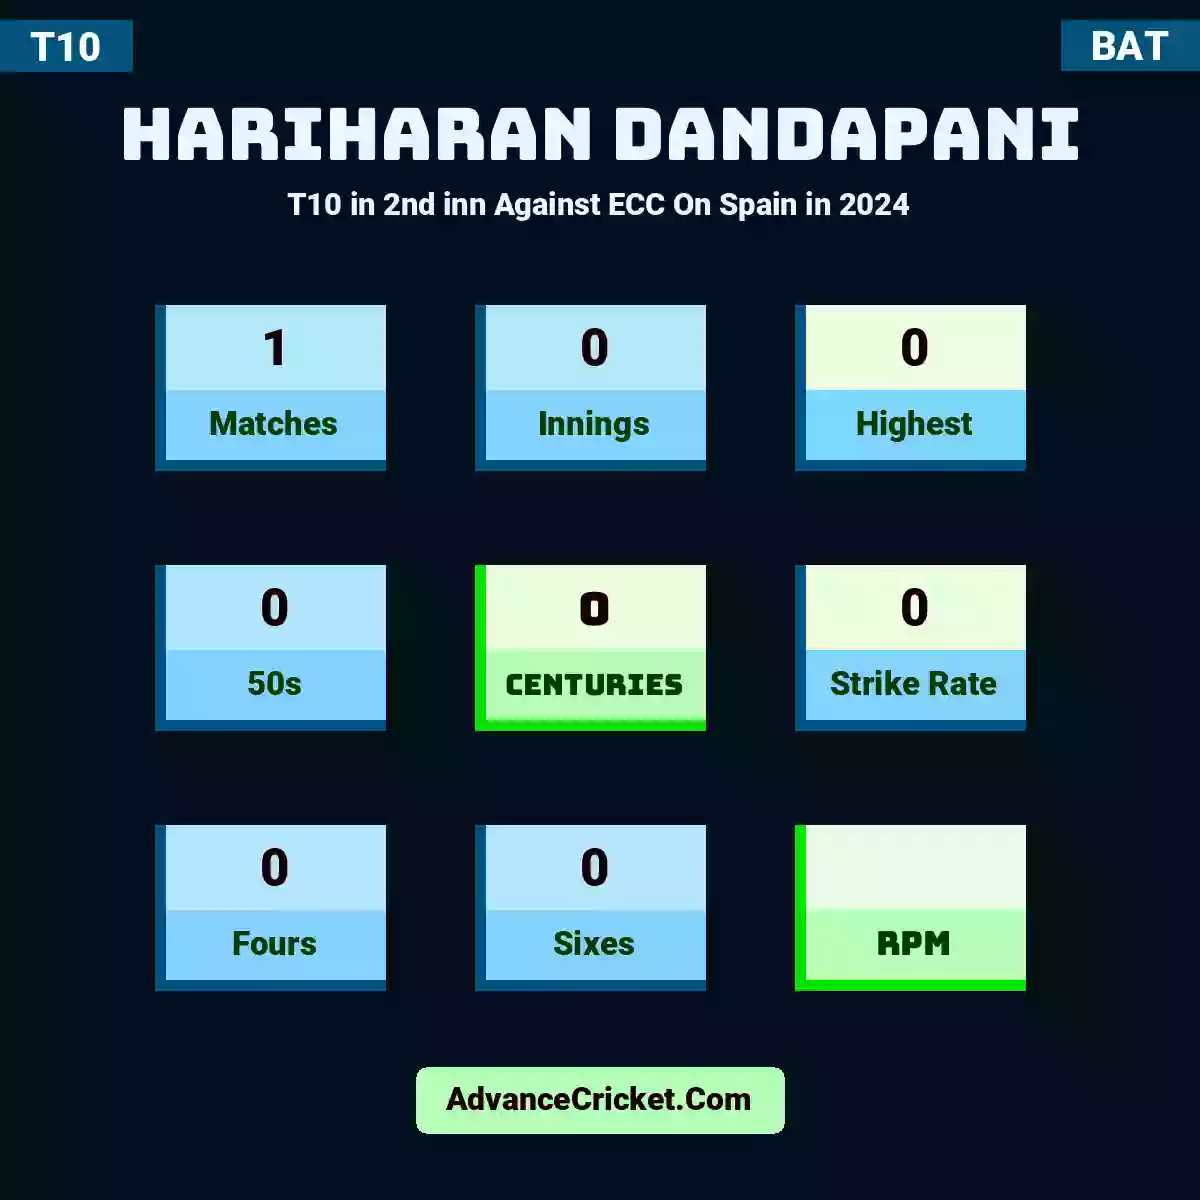 Hariharan Dandapani T10  in 2nd inn Against ECC On Spain in 2024, Hariharan Dandapani played 1 matches, scored 0 runs as highest, 0 half-centuries, and 0 centuries, with a strike rate of 0. H.Dandapani hit 0 fours and 0 sixes.